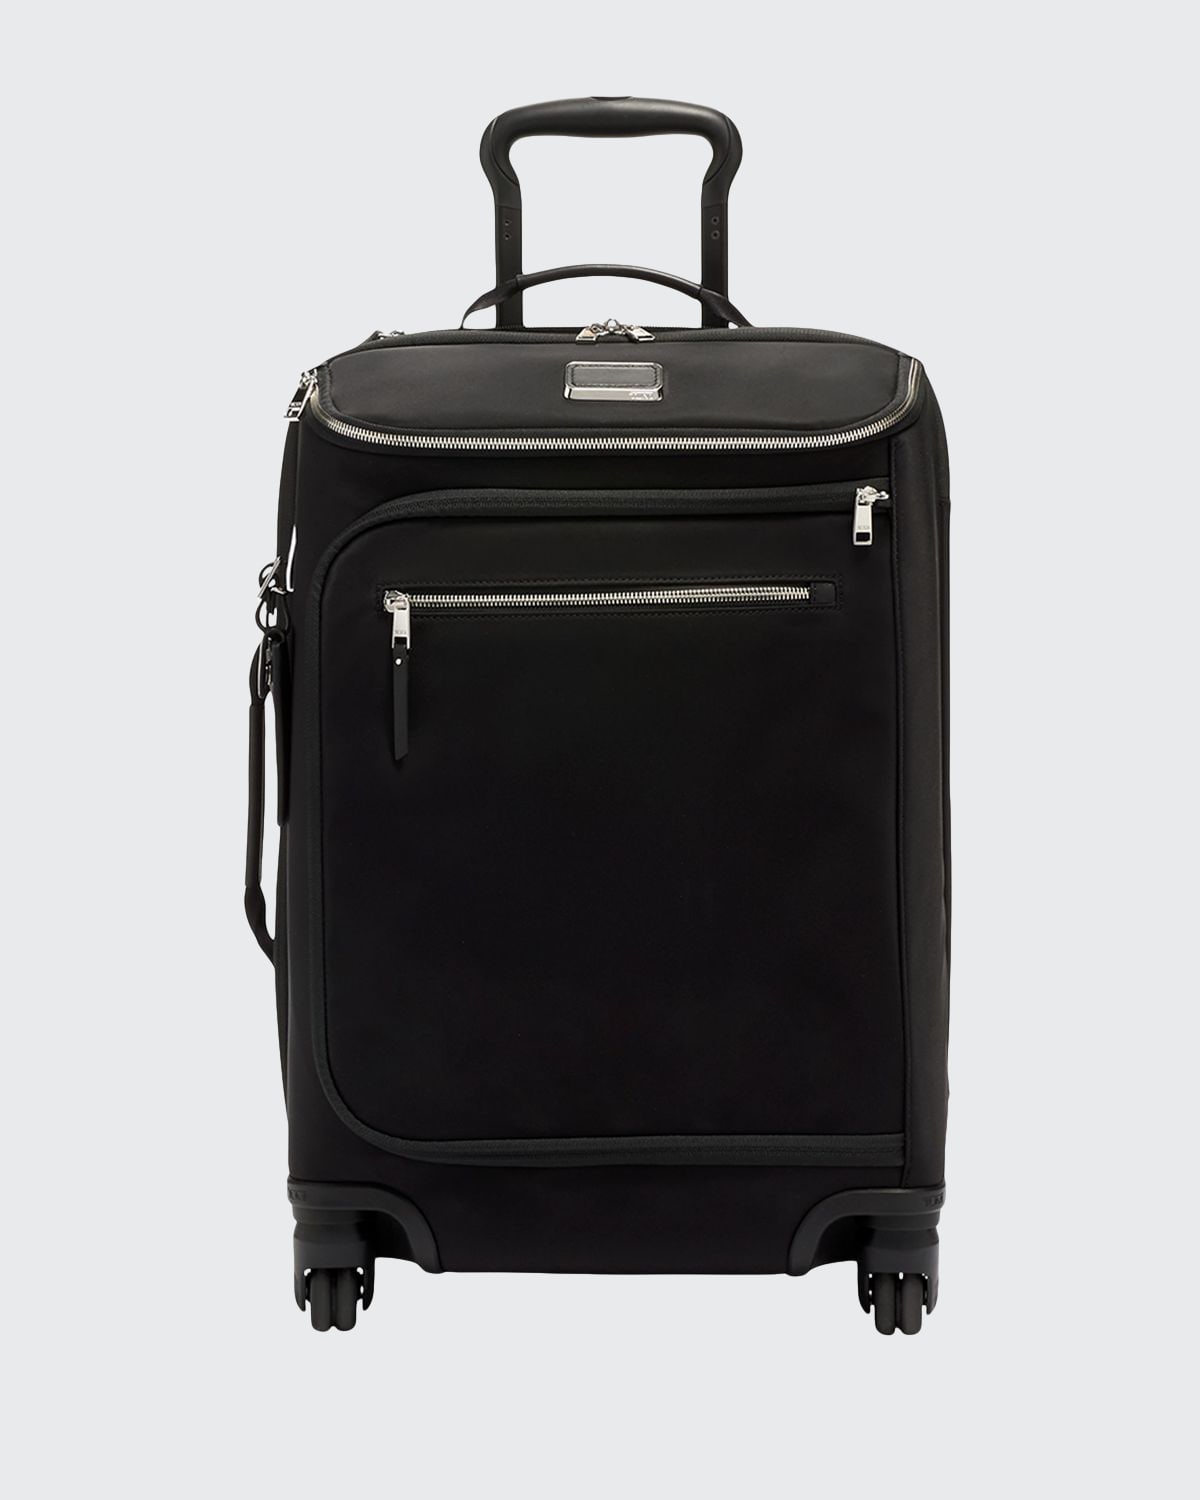 Tumi Leger International Carry-on Luggage, Black/silver